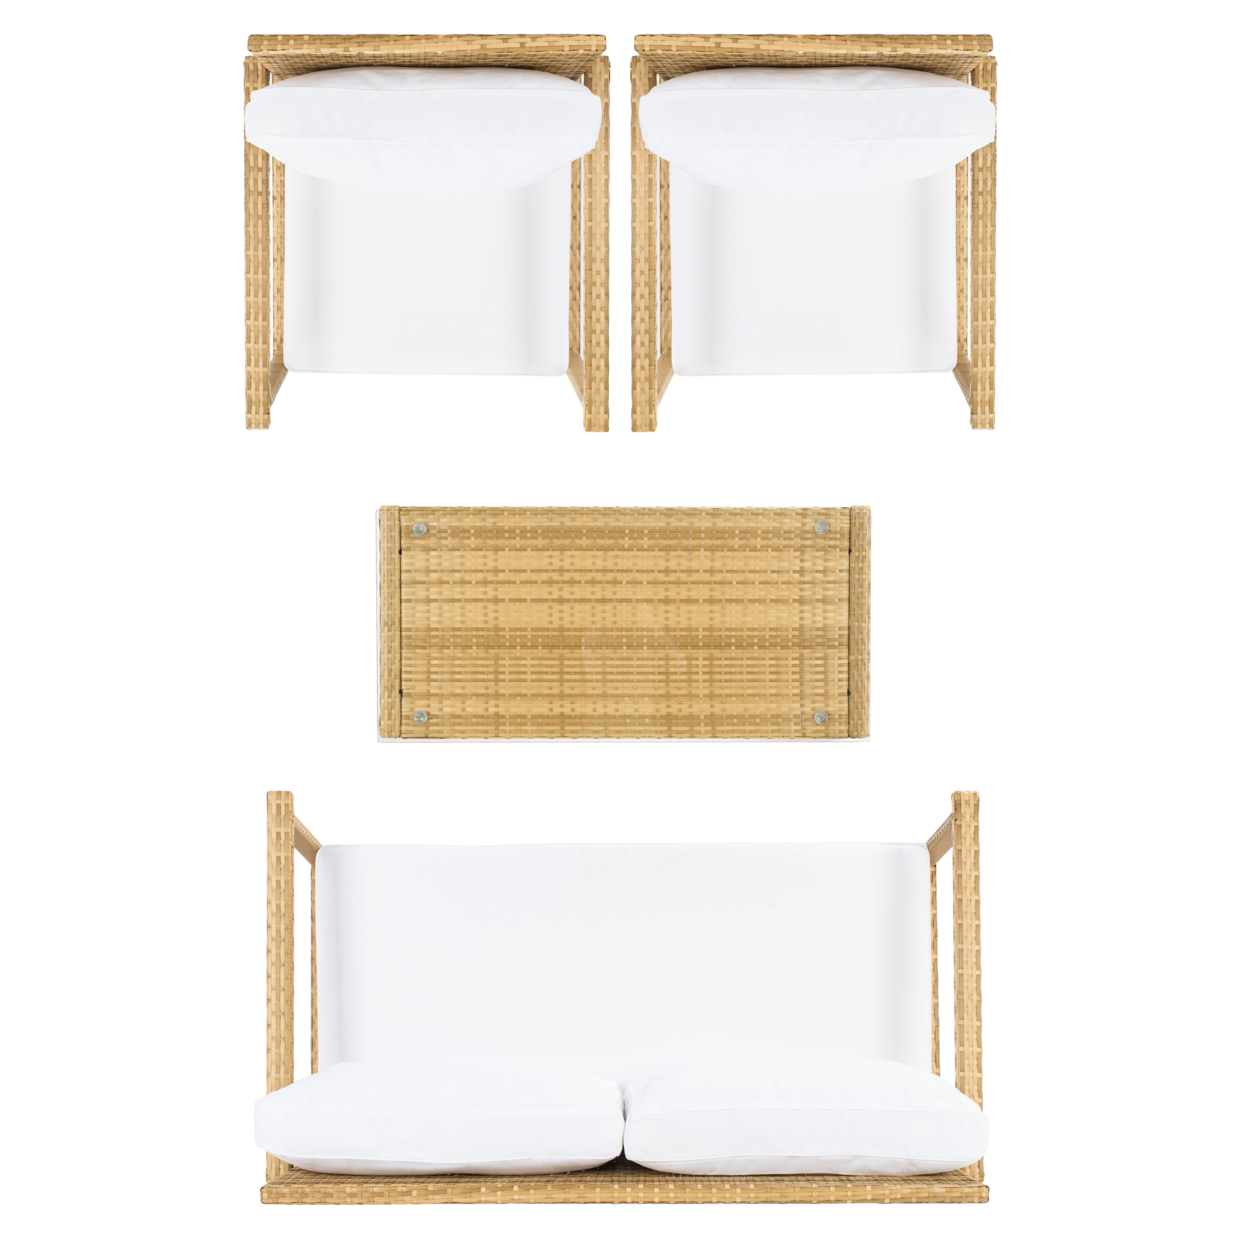 SAFAVIEH Outdoor Collection Garnen 4-Piece Patio Set Natural/White Cushion